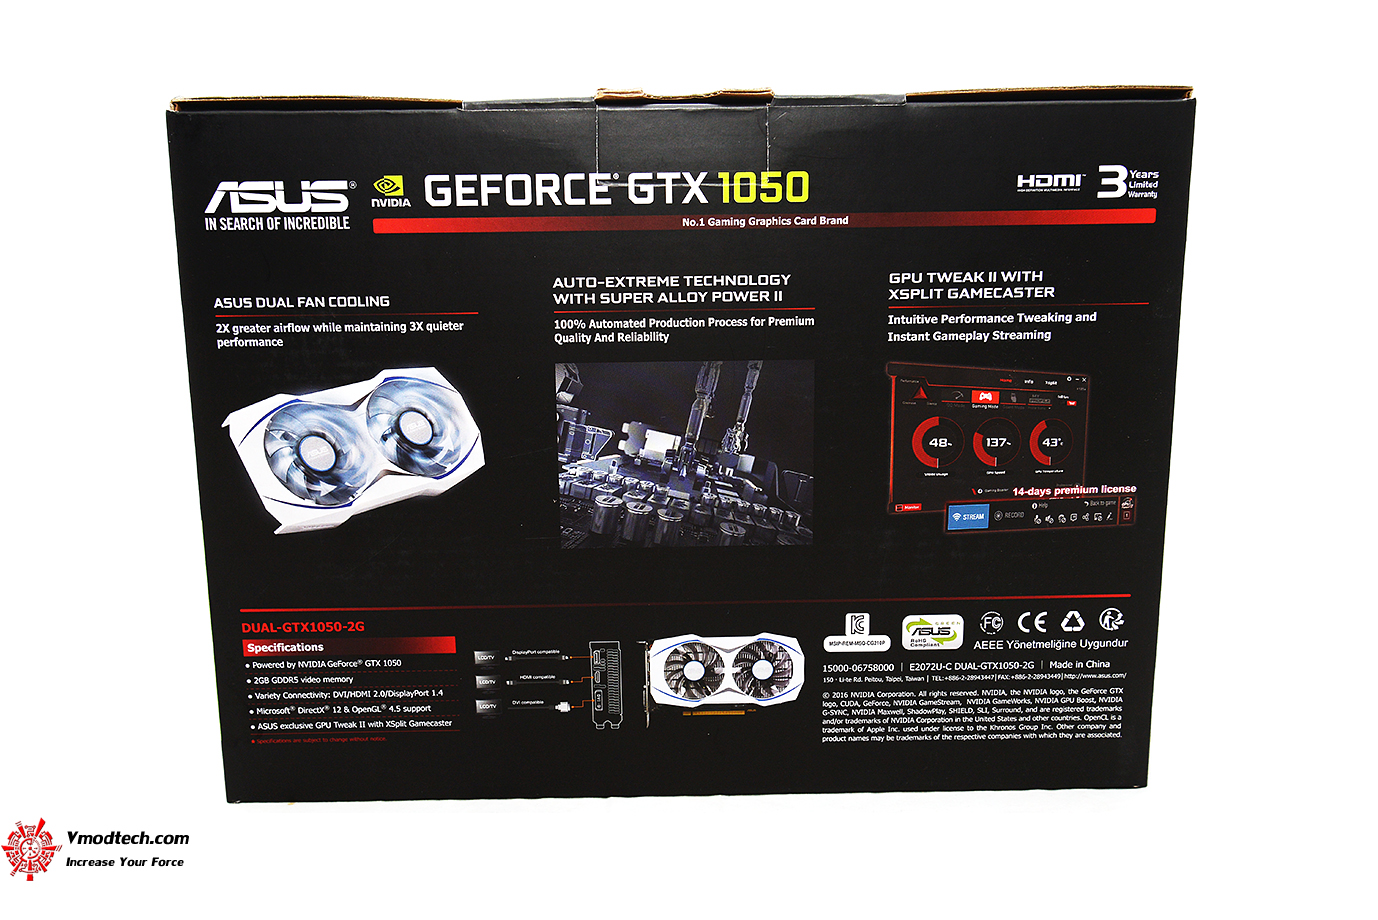 dsc 8812 ASUS GeForce GTX 1050 2GB Dual fan Edition Review